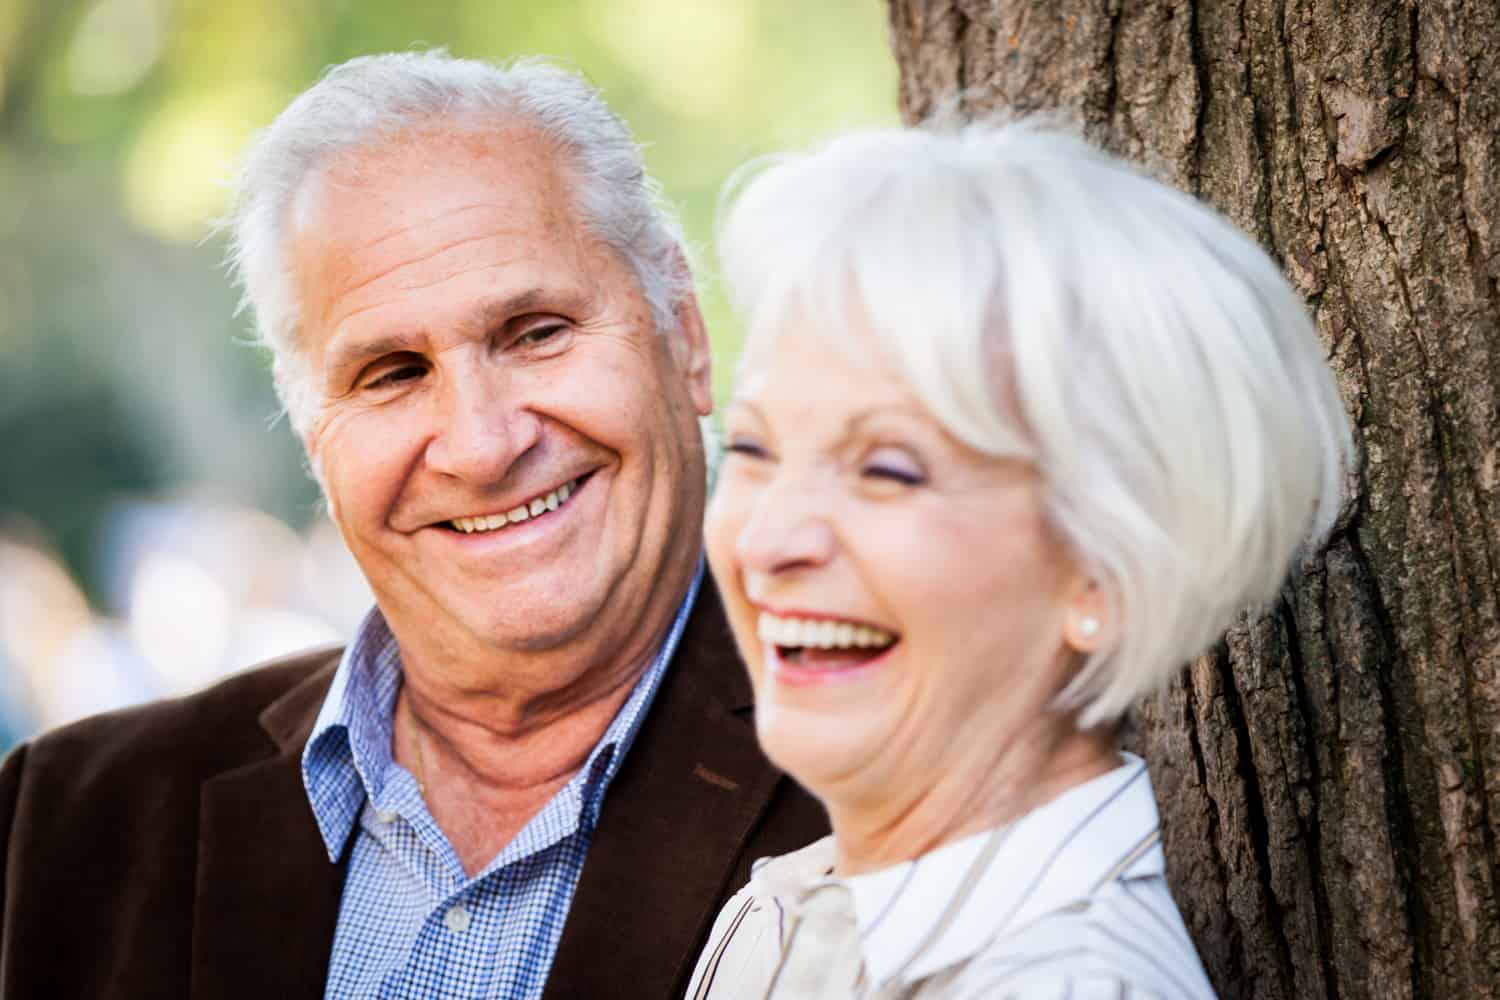 Older man looking at laughing older woman